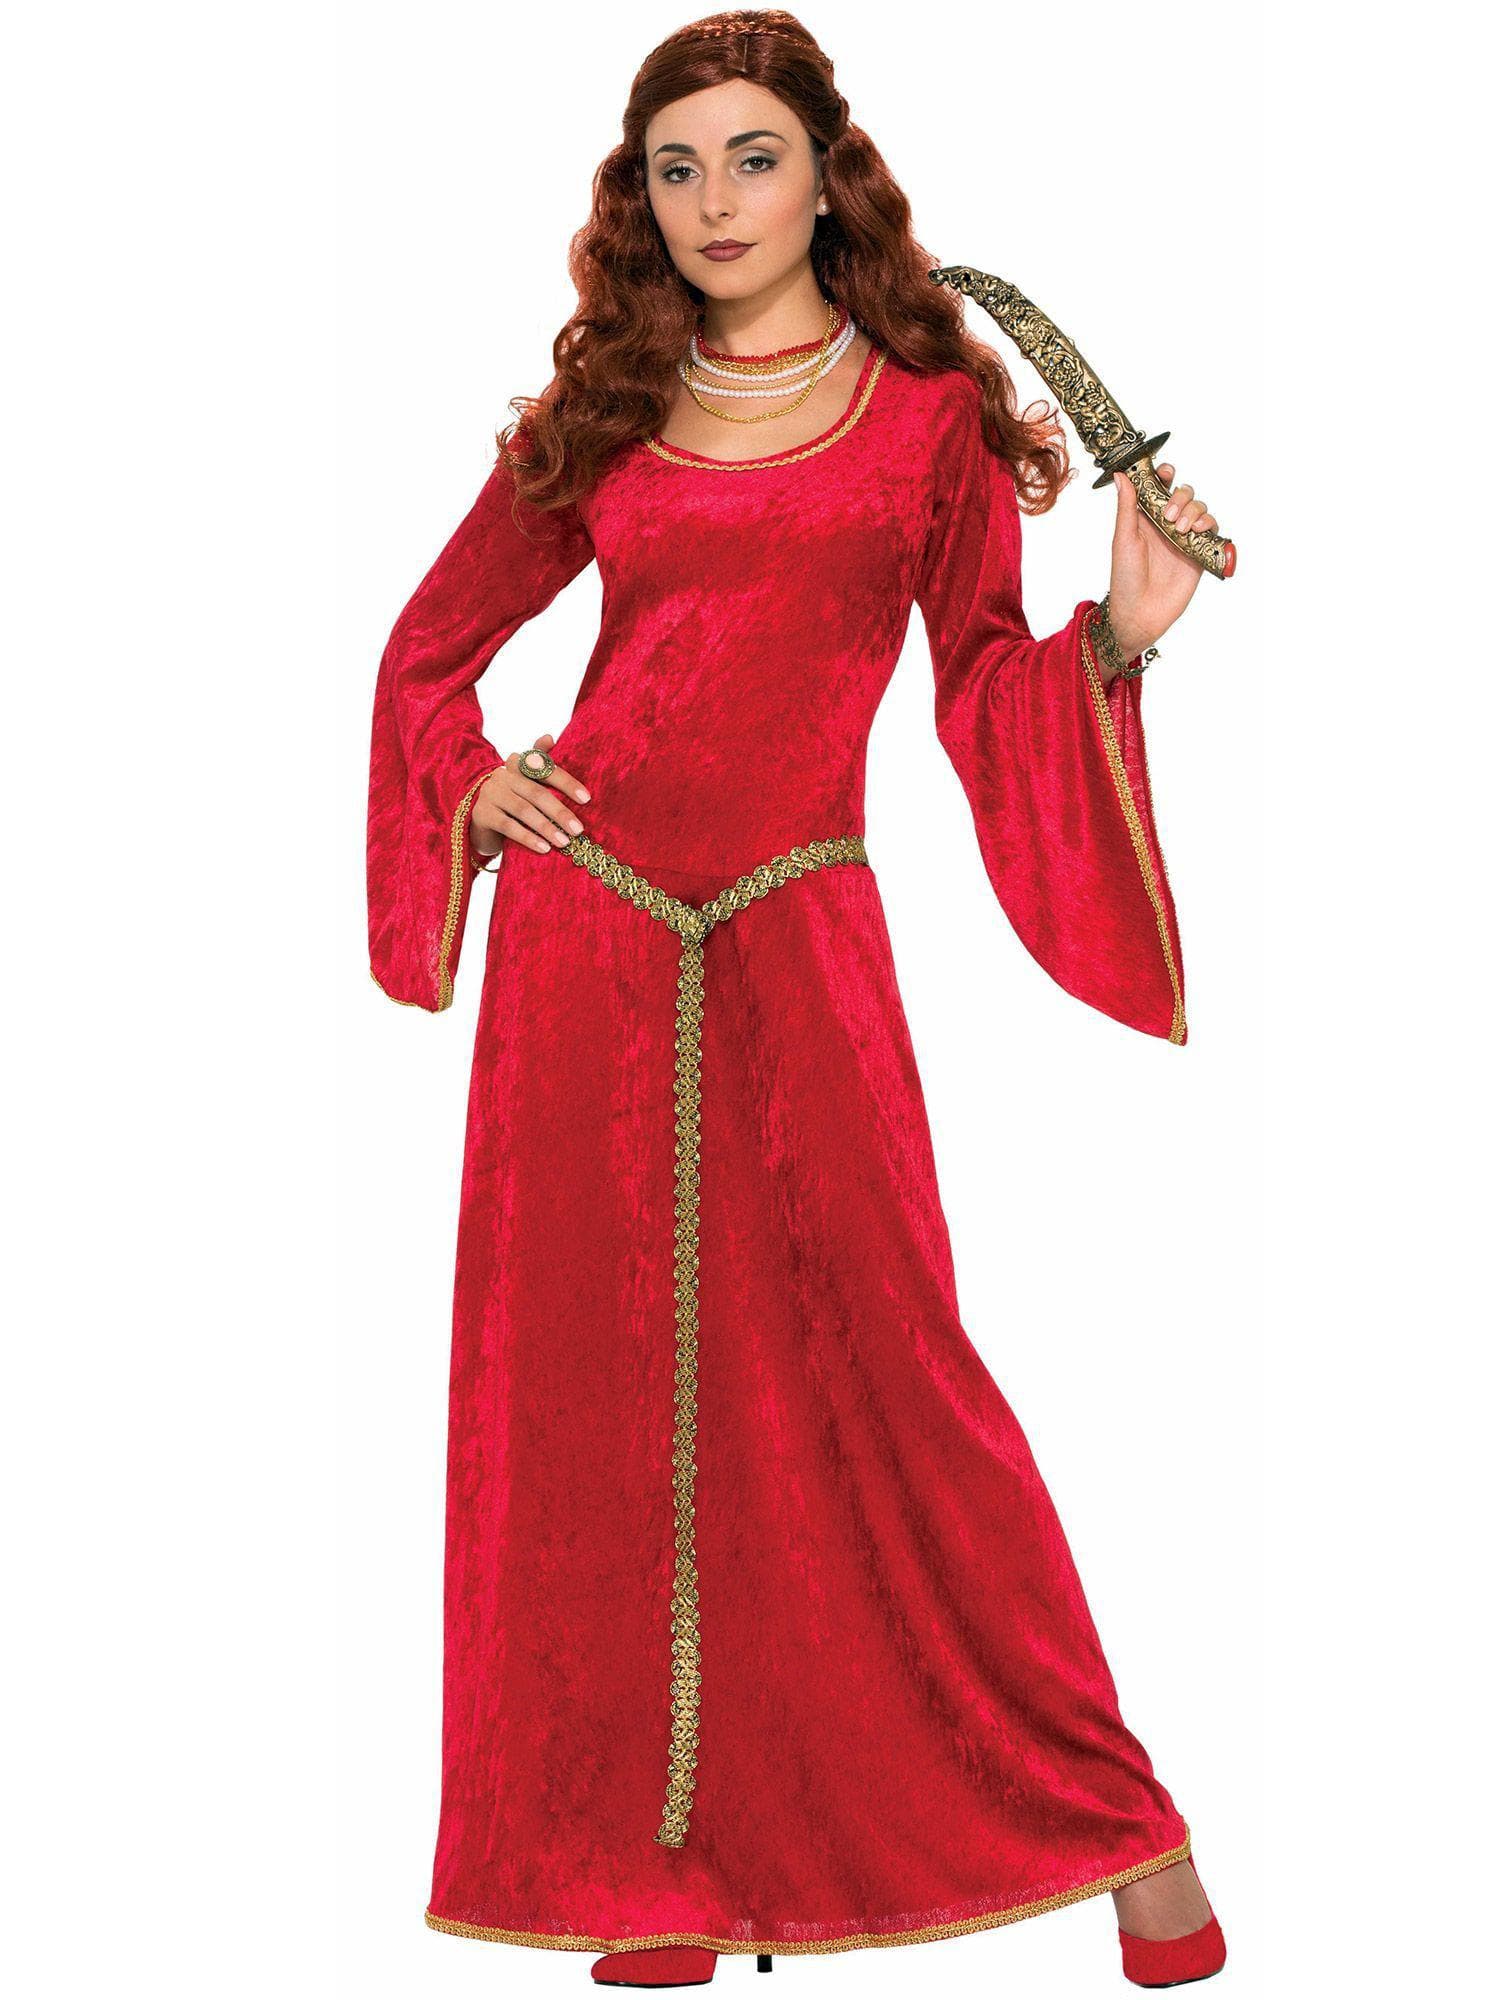 Adult Ruby Sorceress Renaissance Costume - costumes.com